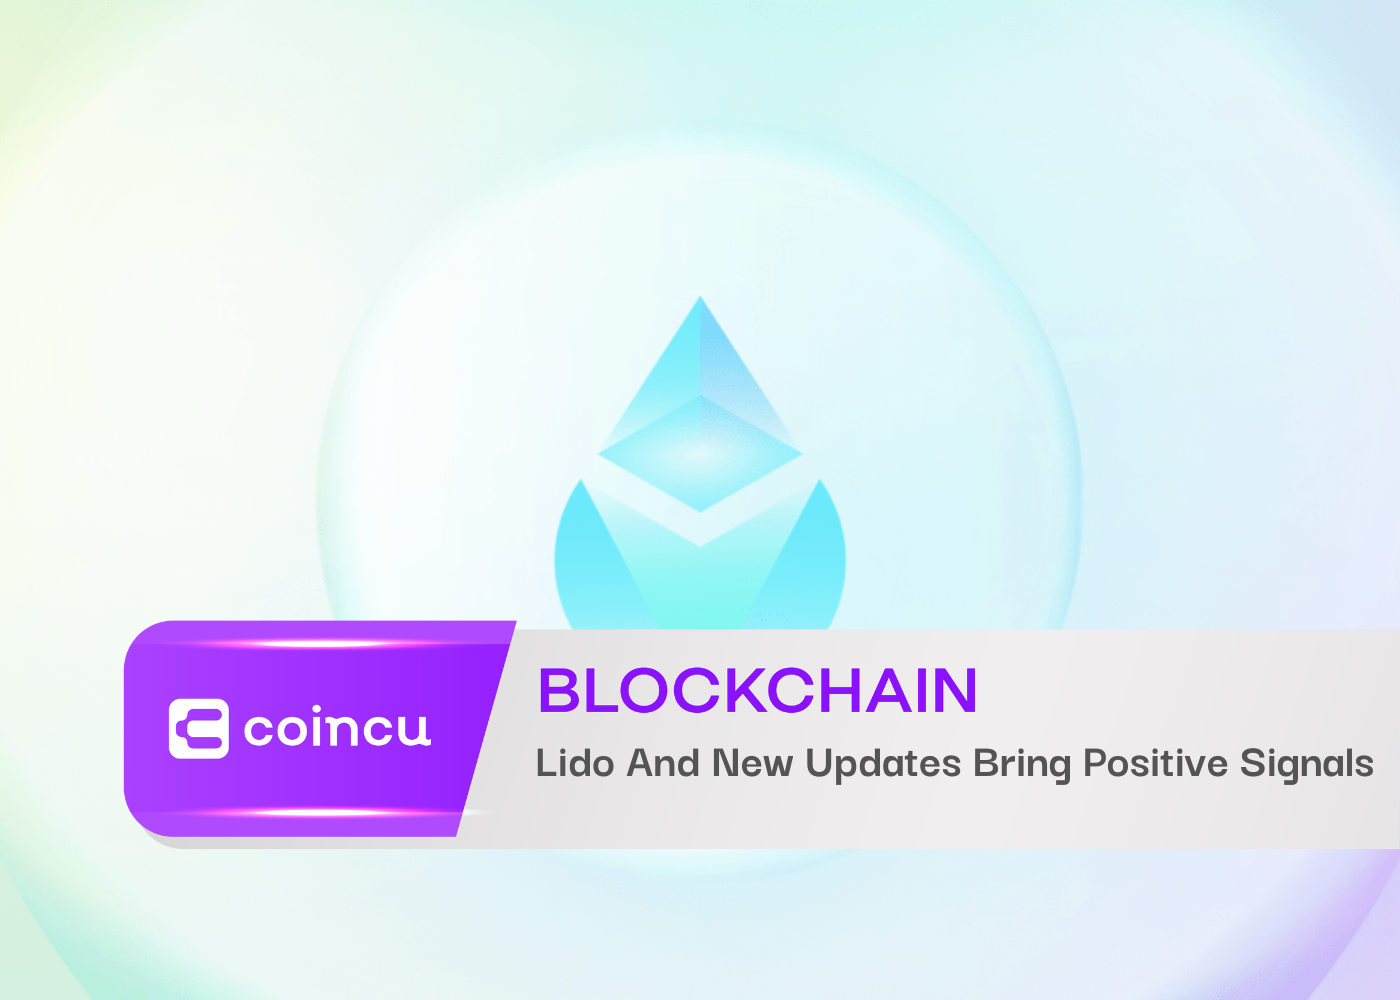 Lido And New Updates Bring Positive Signals